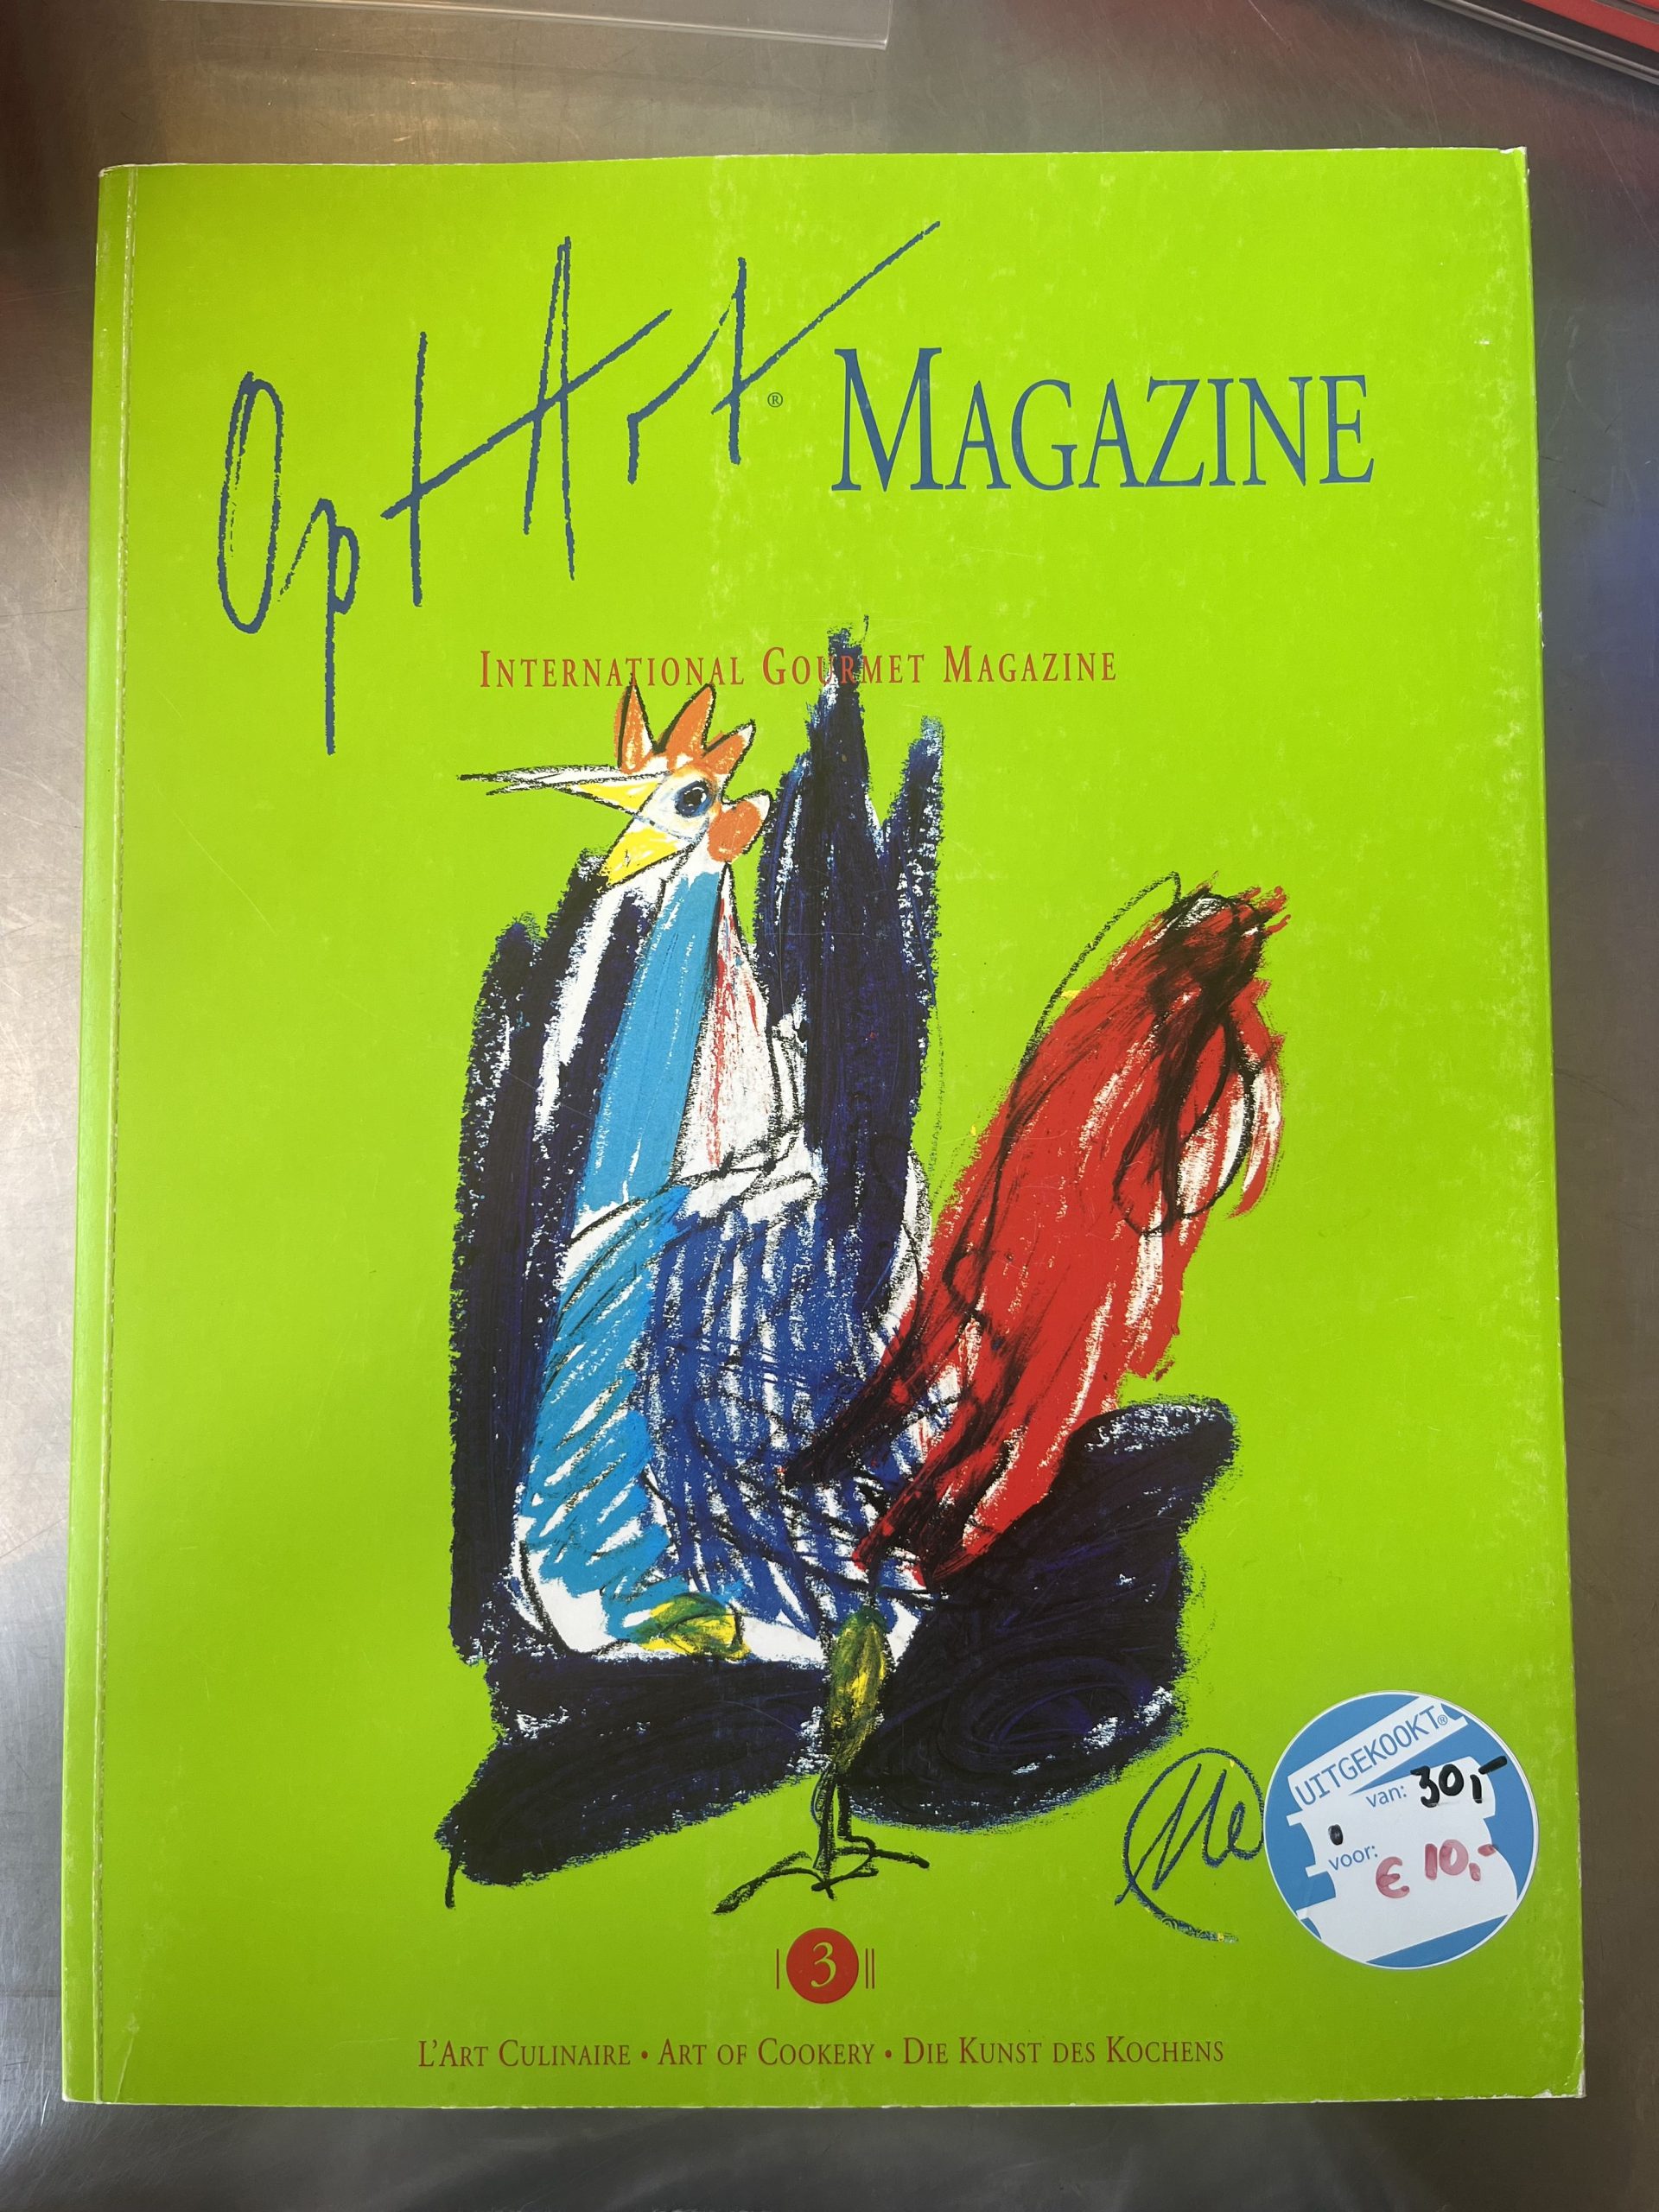 OptArt Magazine 3